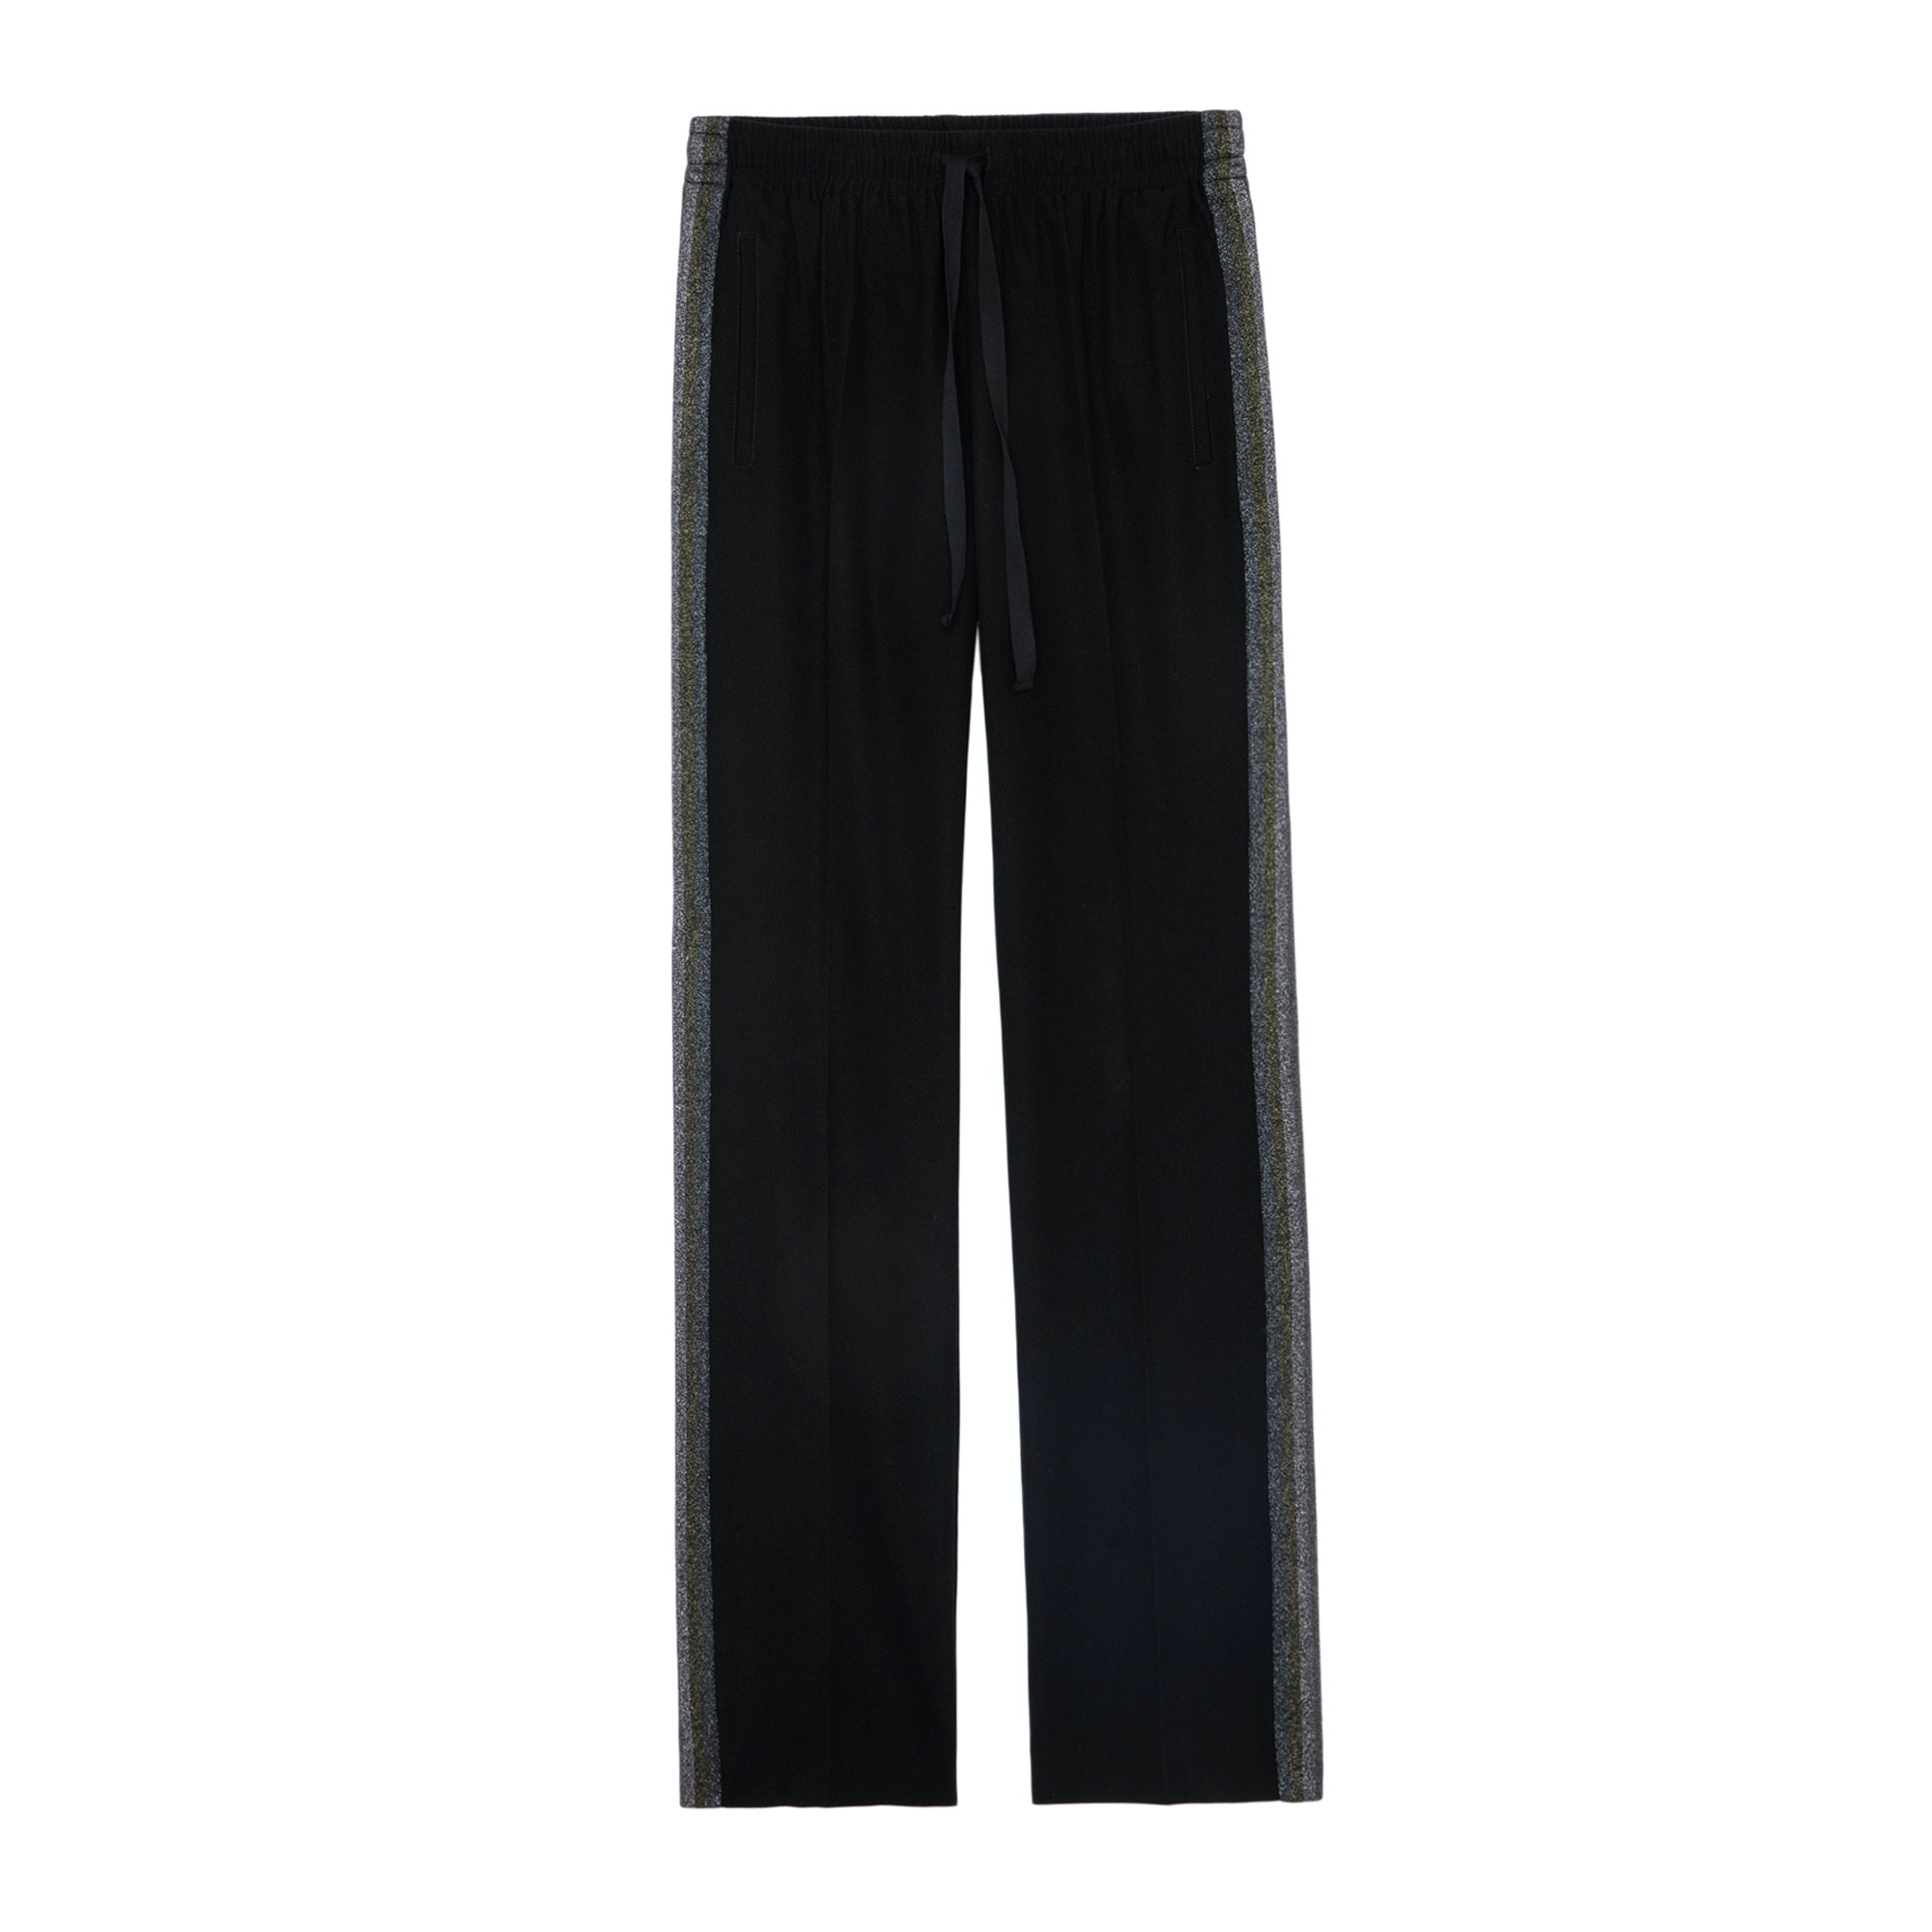 Pantalon Pomy Noir - Taille 40 - Femme